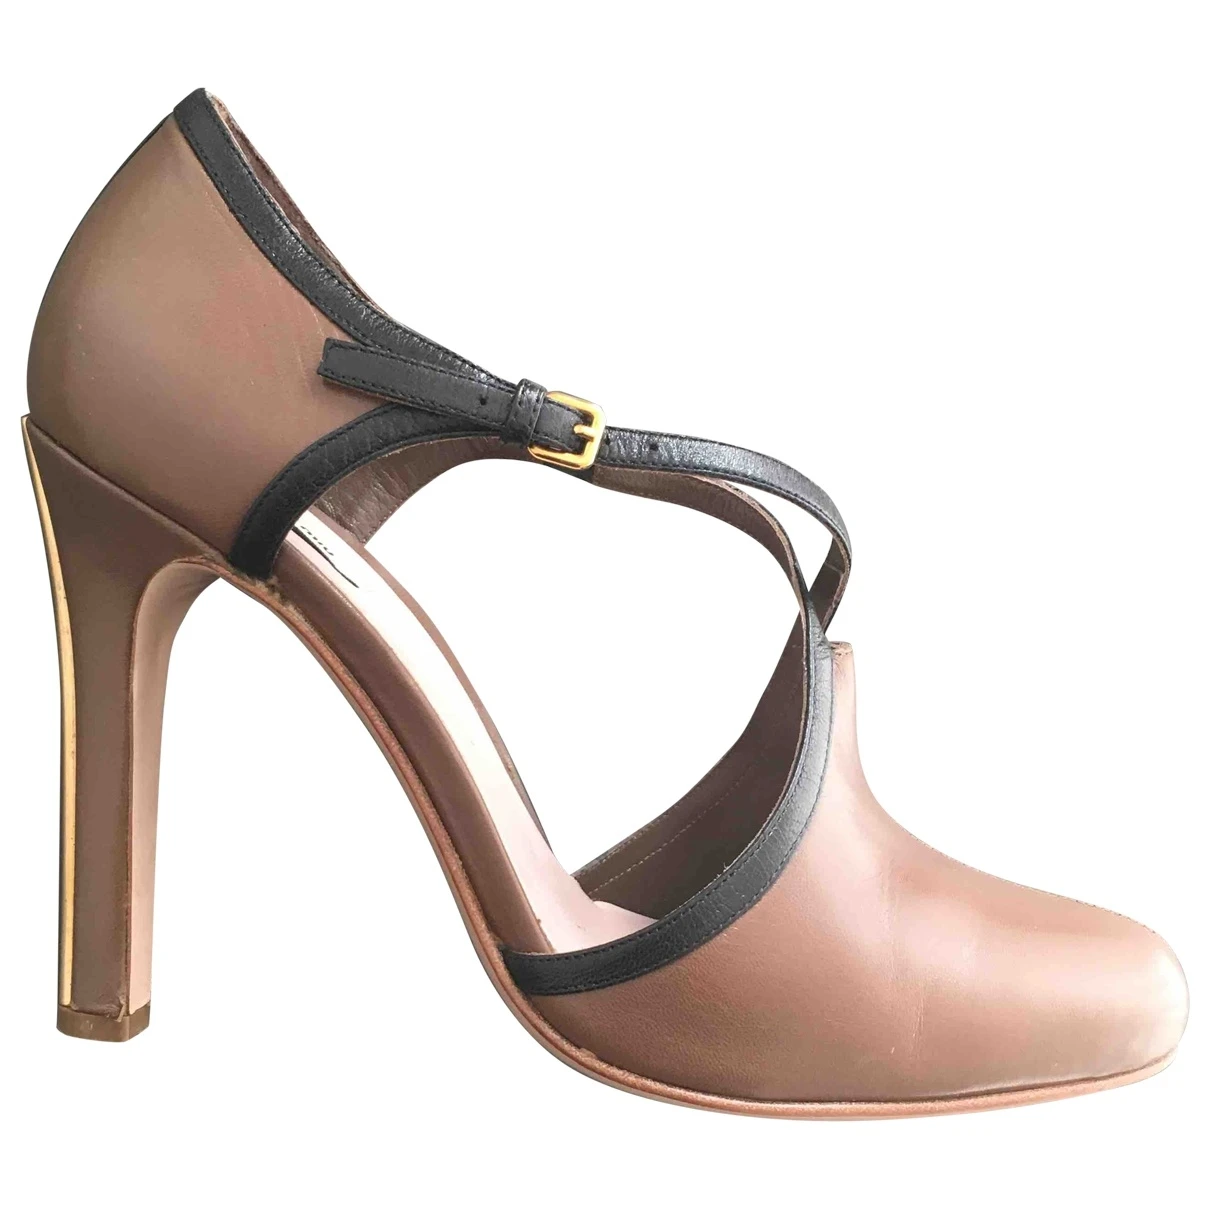 shoes Miu Miu sandals for Female Leather 39 EU. Used condition